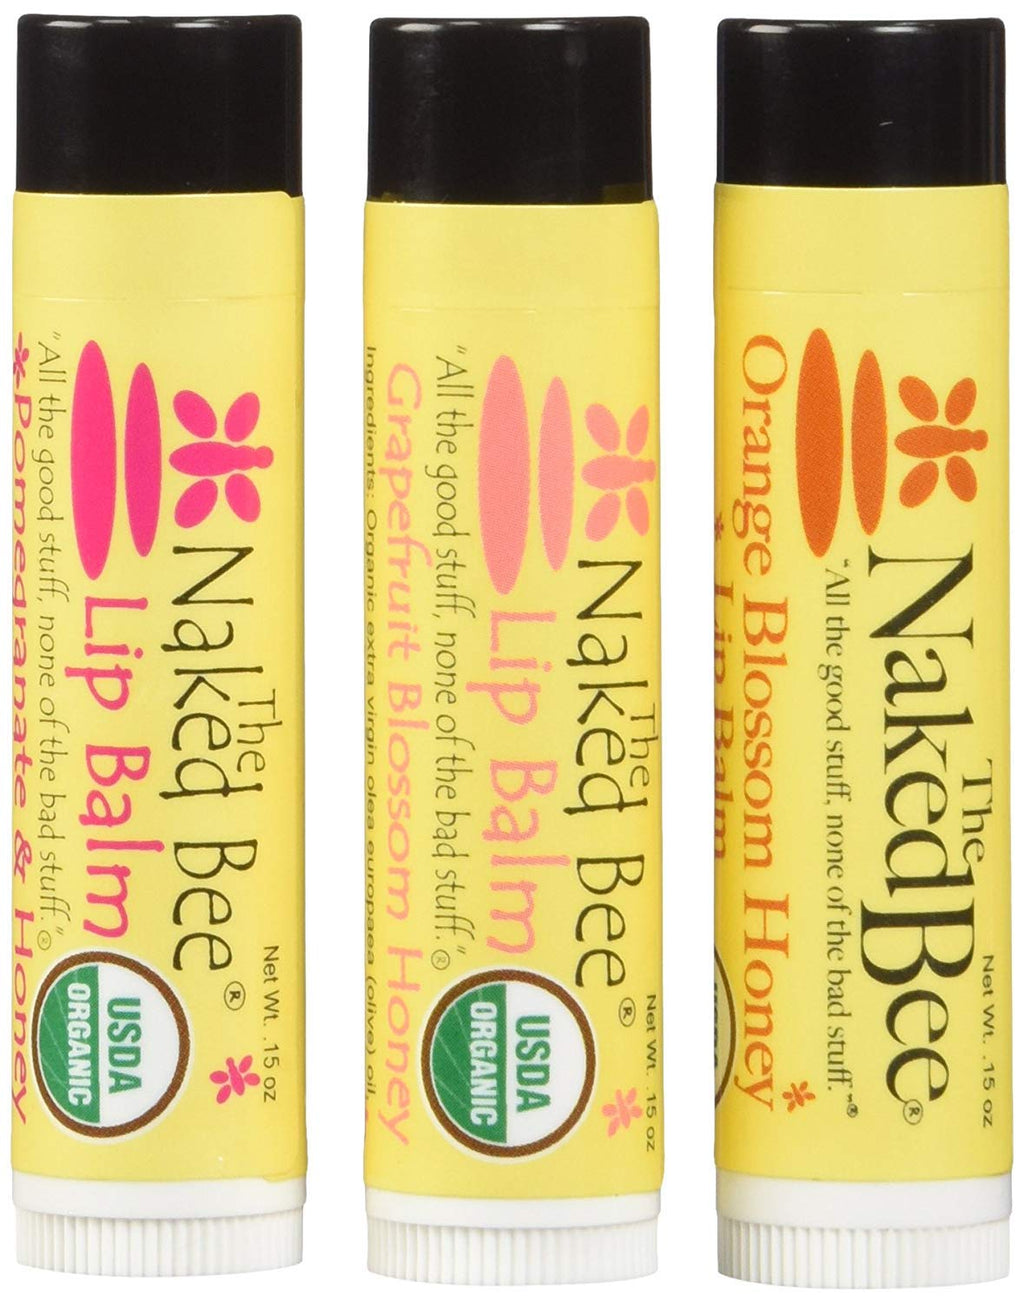 [Australia] - The Naked Bee Lip Balm in Orange Blossom Honey, Grapefruit Blossom Honey, and Pomegranate & Honey, 0.15 oz, 3 Pack 